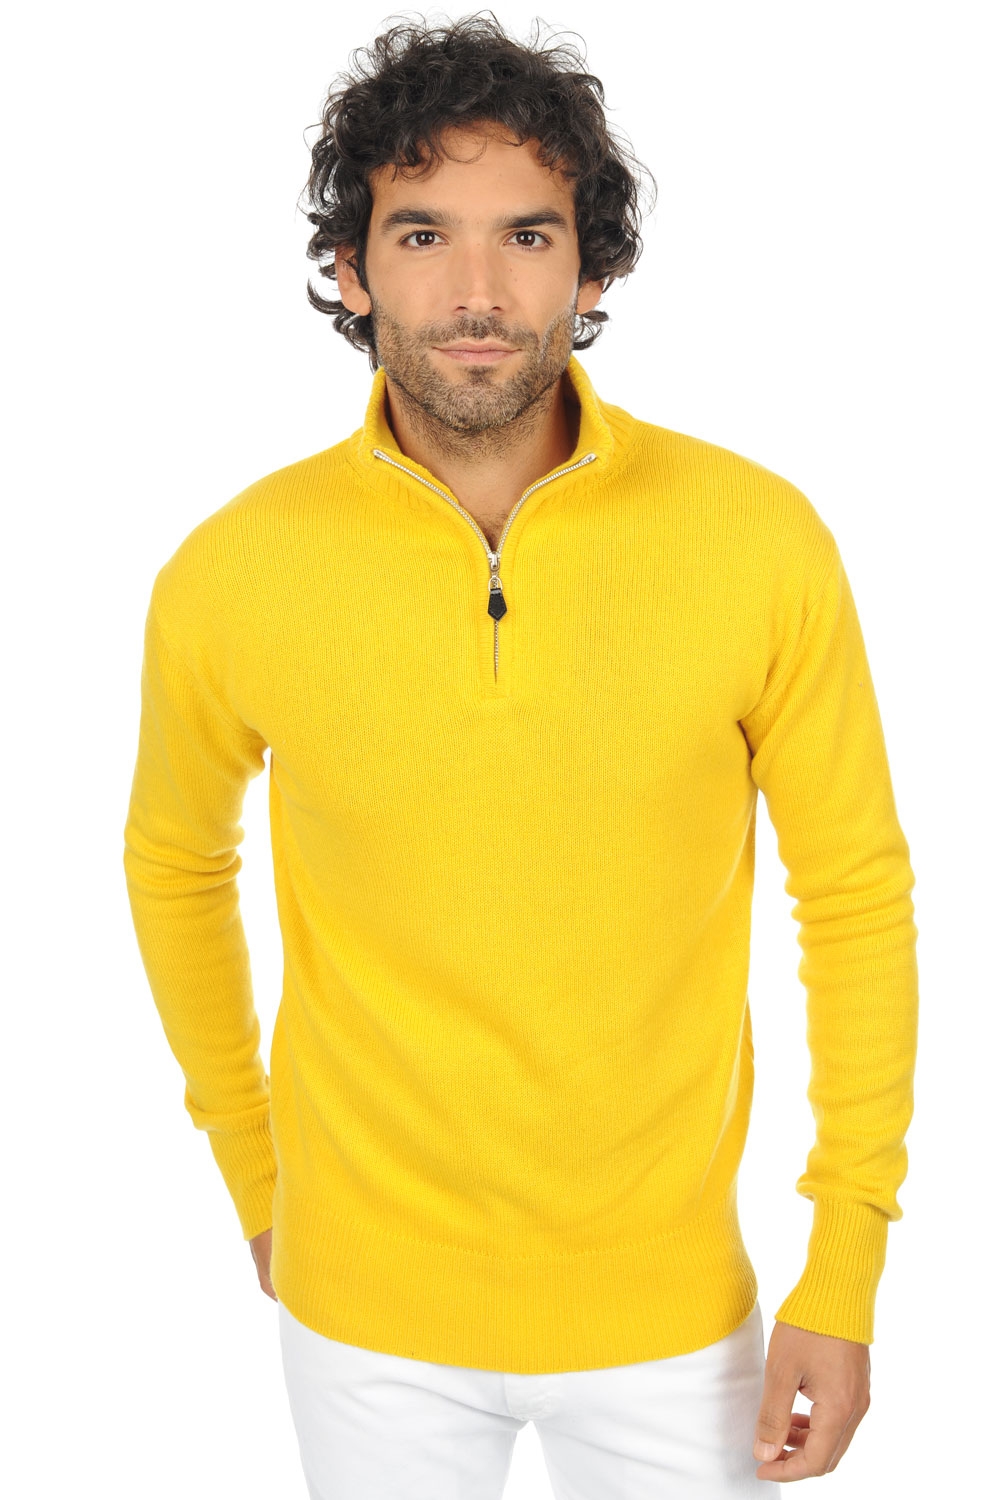 Cashmere men polo style sweaters donovan cyber yellow xs